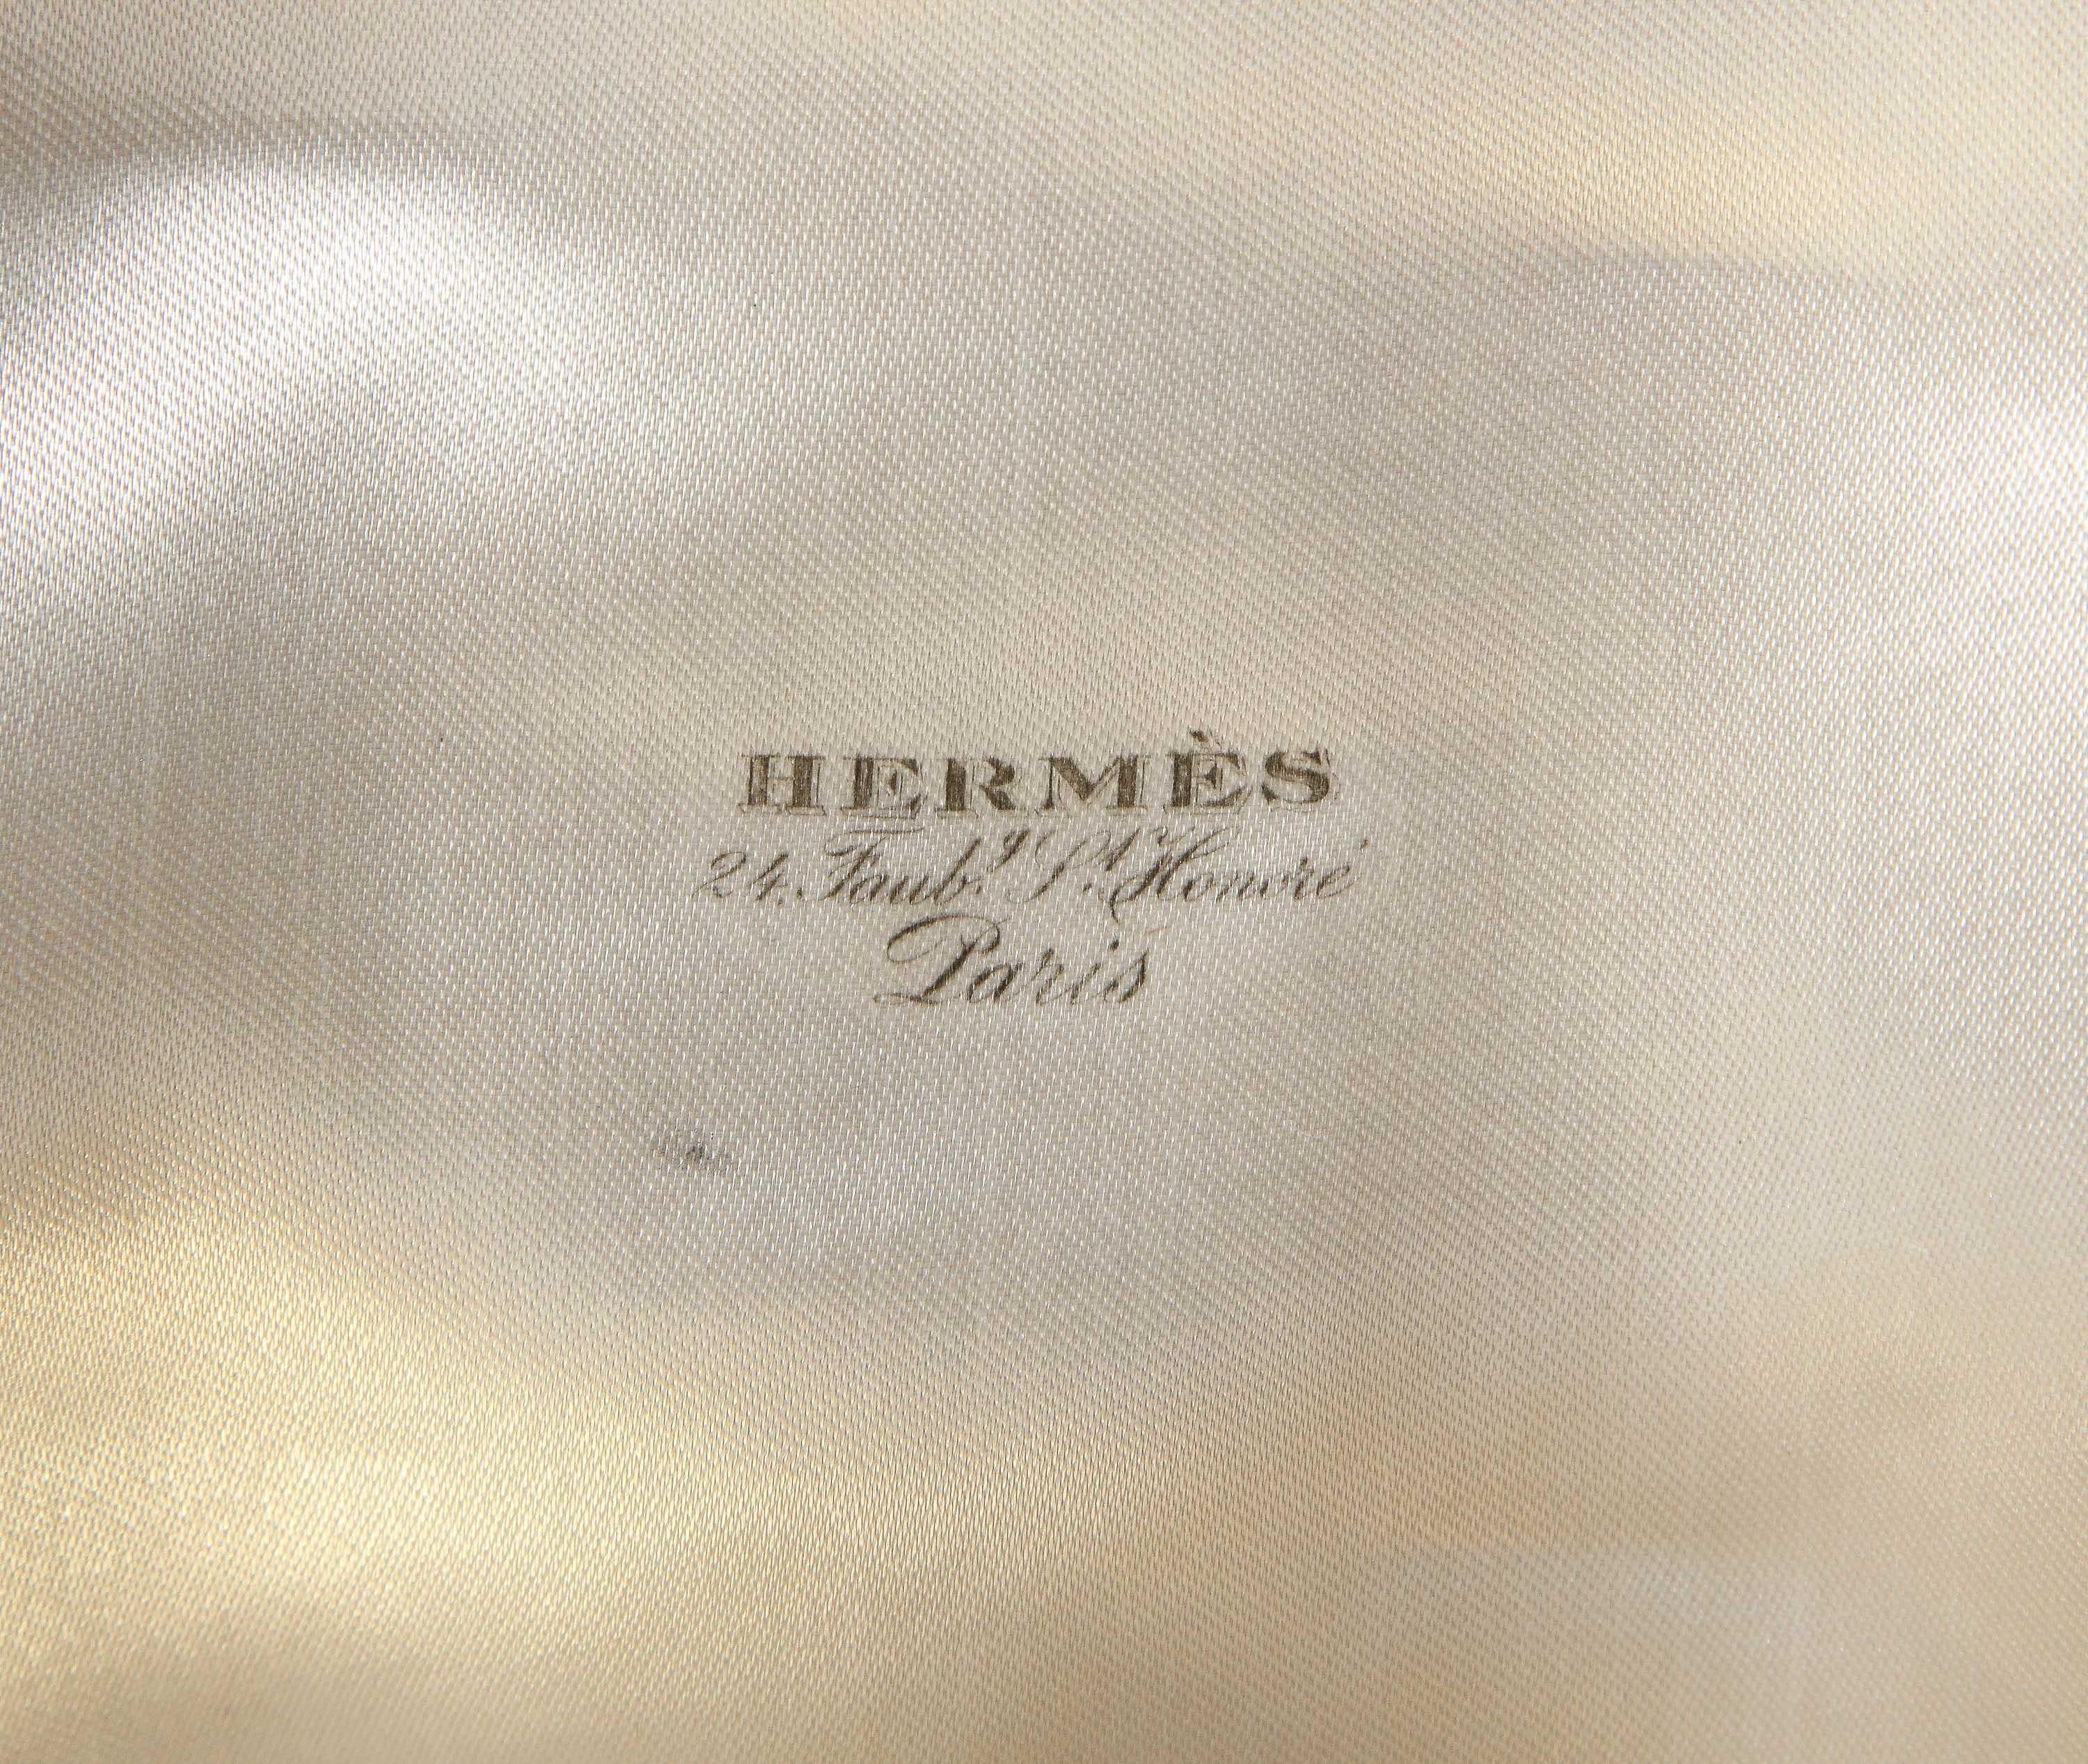 Hermes Paris & Ravinet d'Enfert, a Rare French Silver-Gilt Smoking Set 12